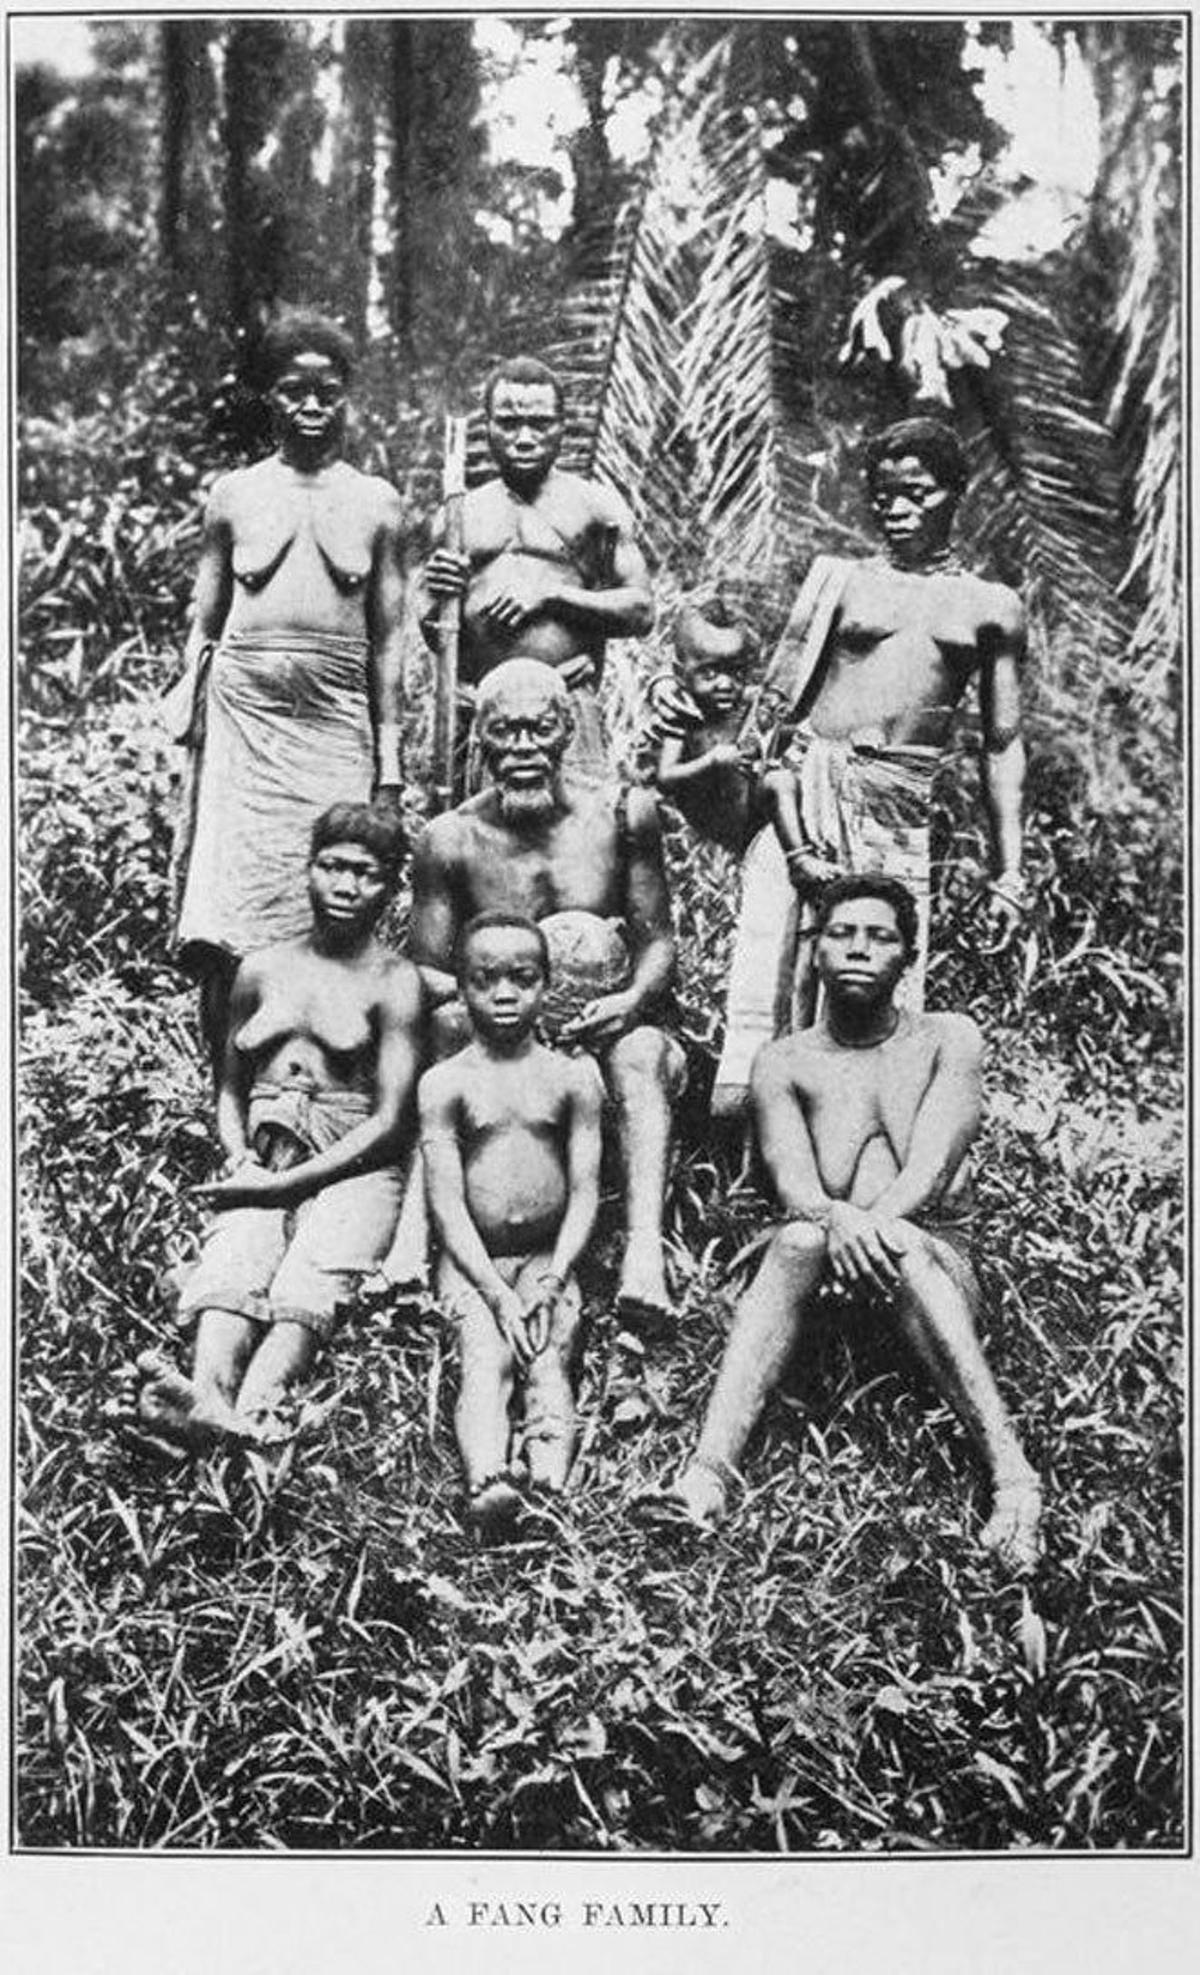 Una familia de la etnia fang en 1912.